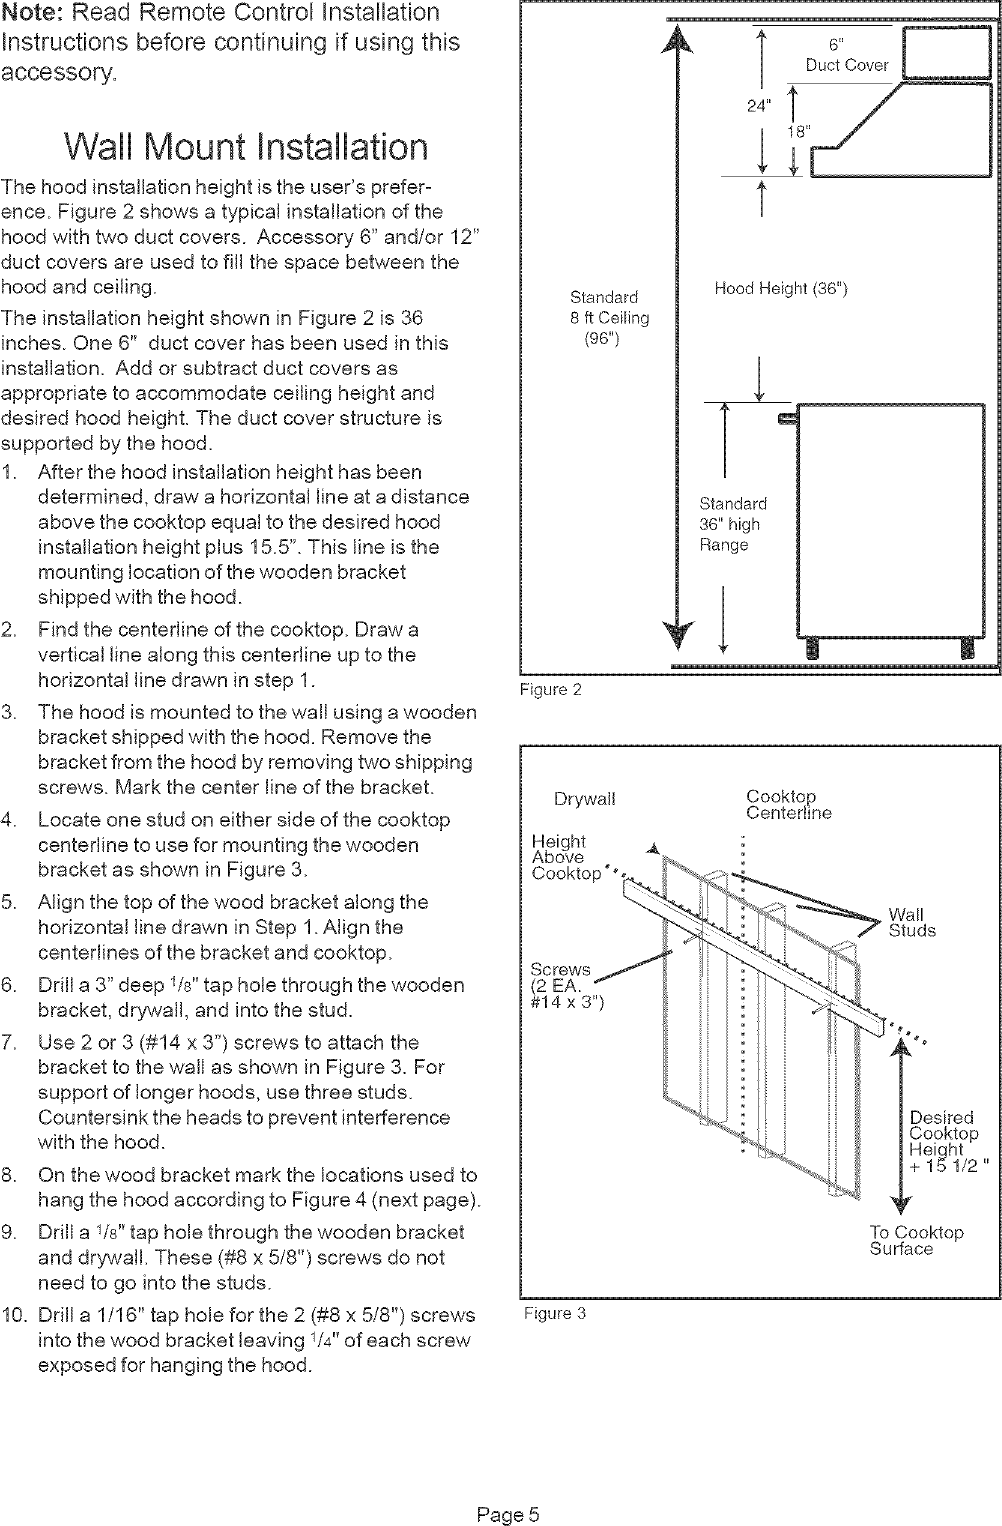 Page 5 of 12 - THERMADOR  Range Hood Manual L0512045